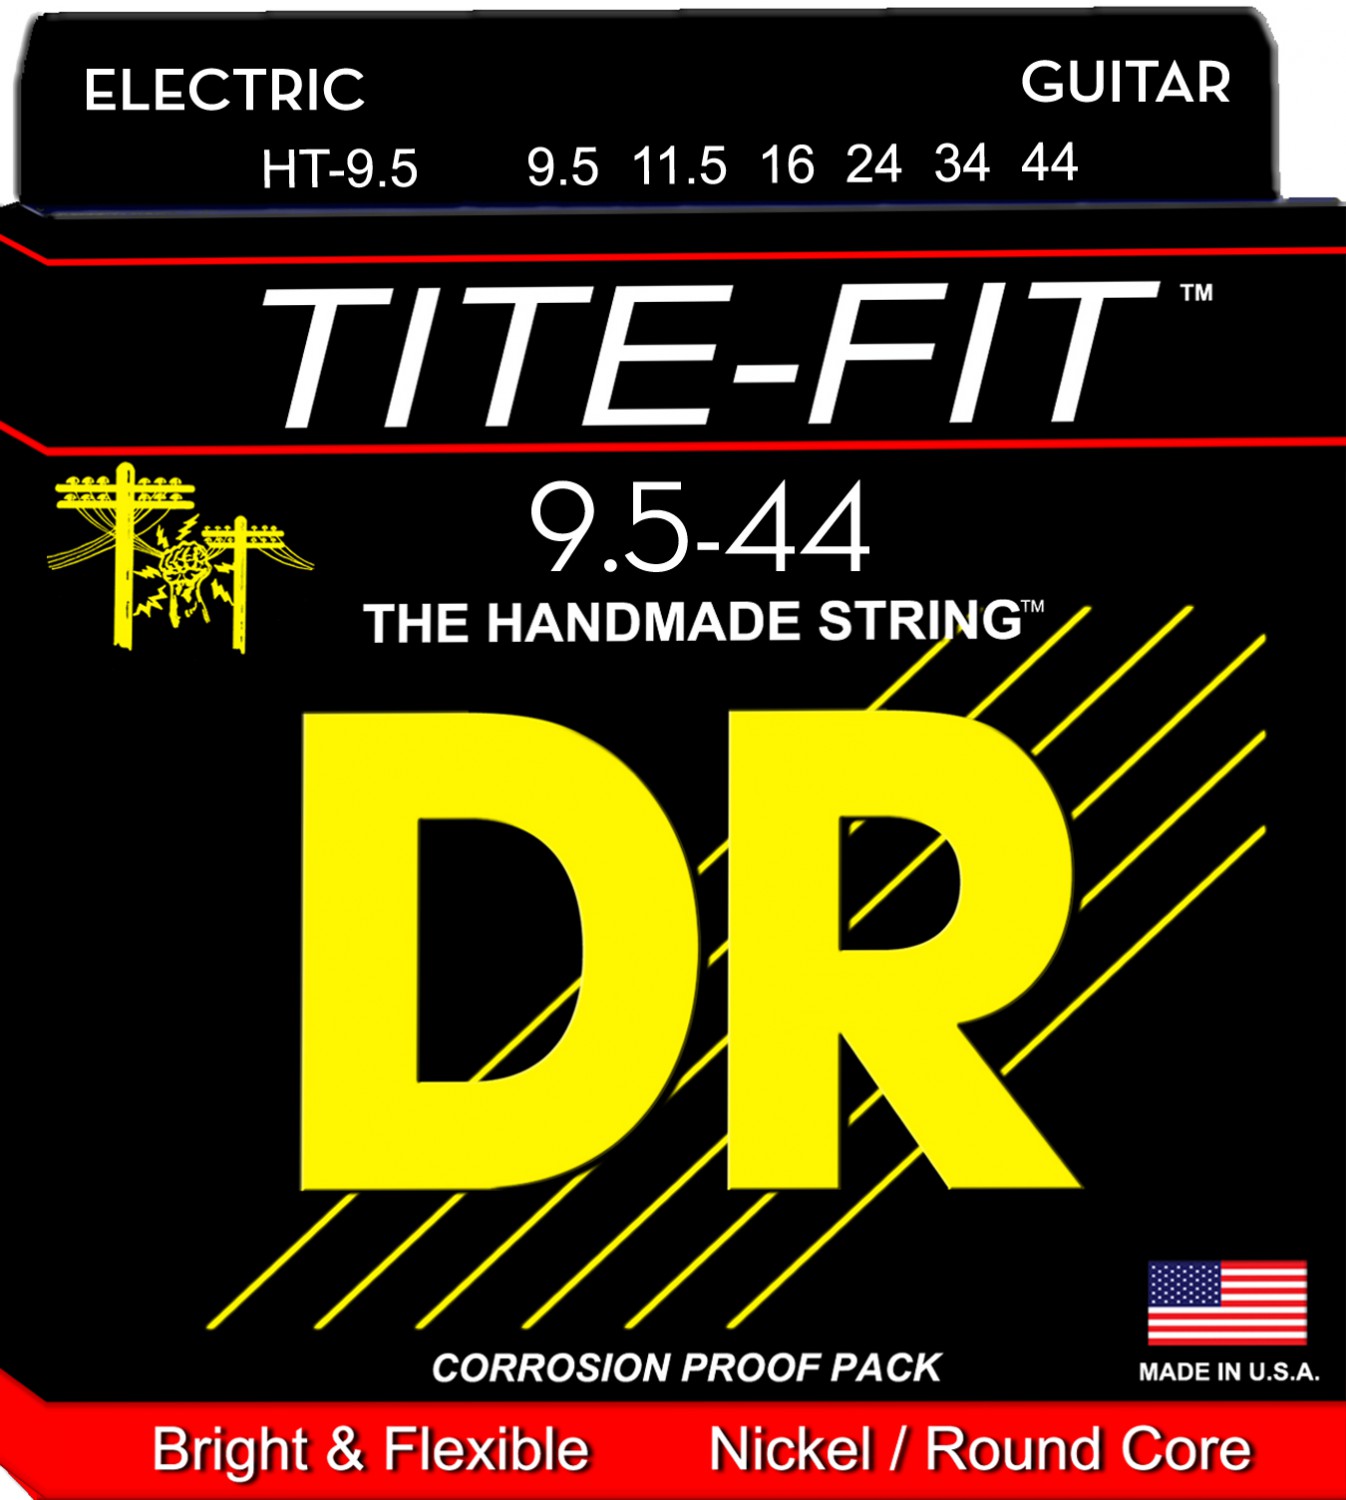 DR TITE-FIT - HT 9.5 - struny do gitary elektrycznej Set, Half Tight, .0095-.044